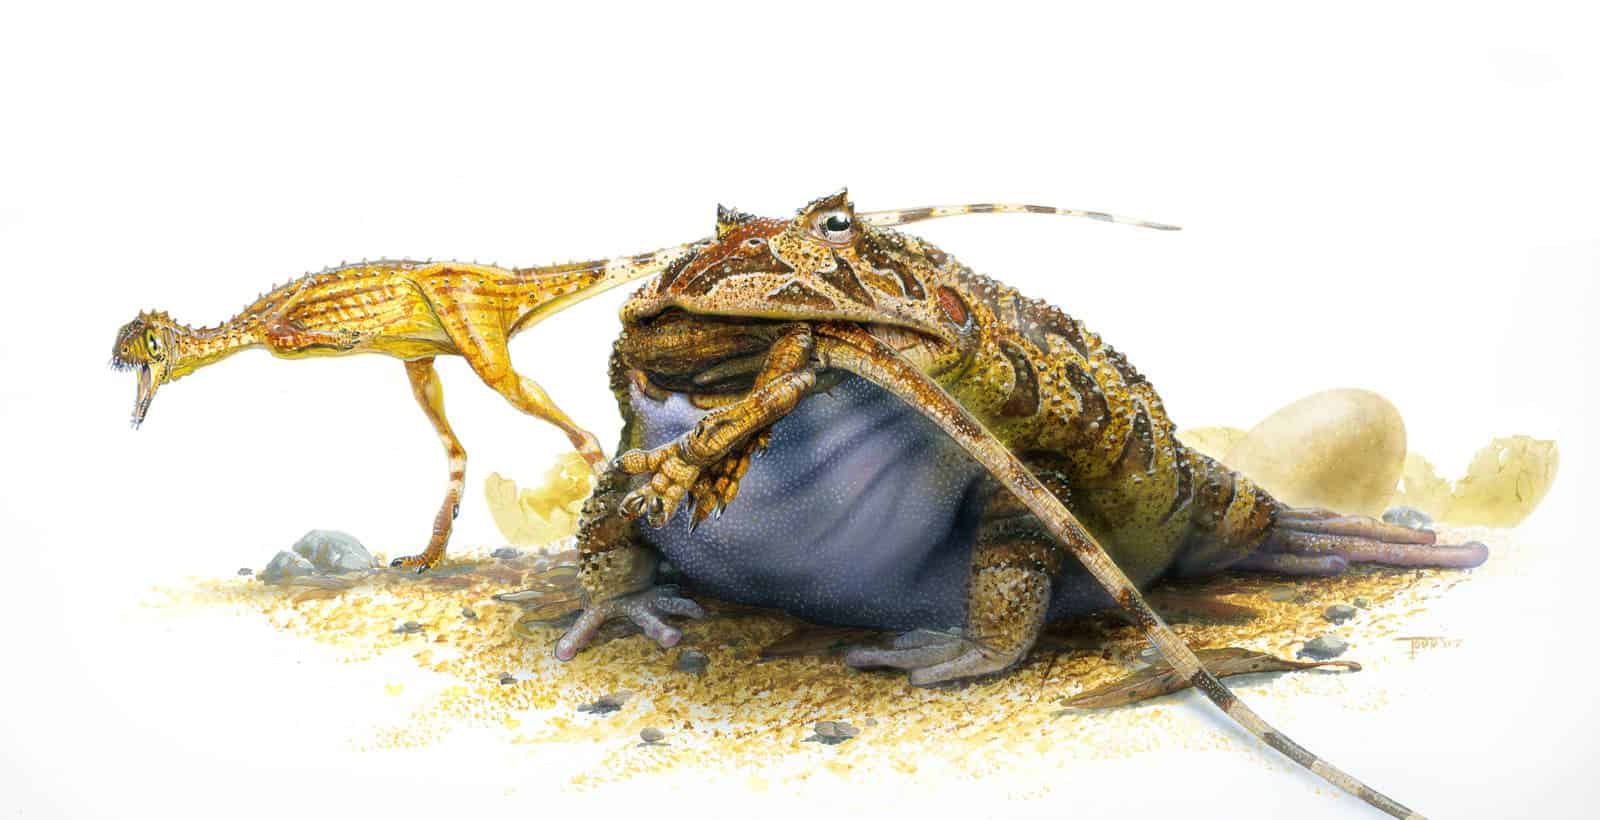 Beelzebufo ampinga munching on Cretaceous lunch. Credit: Wikimedia Commons.